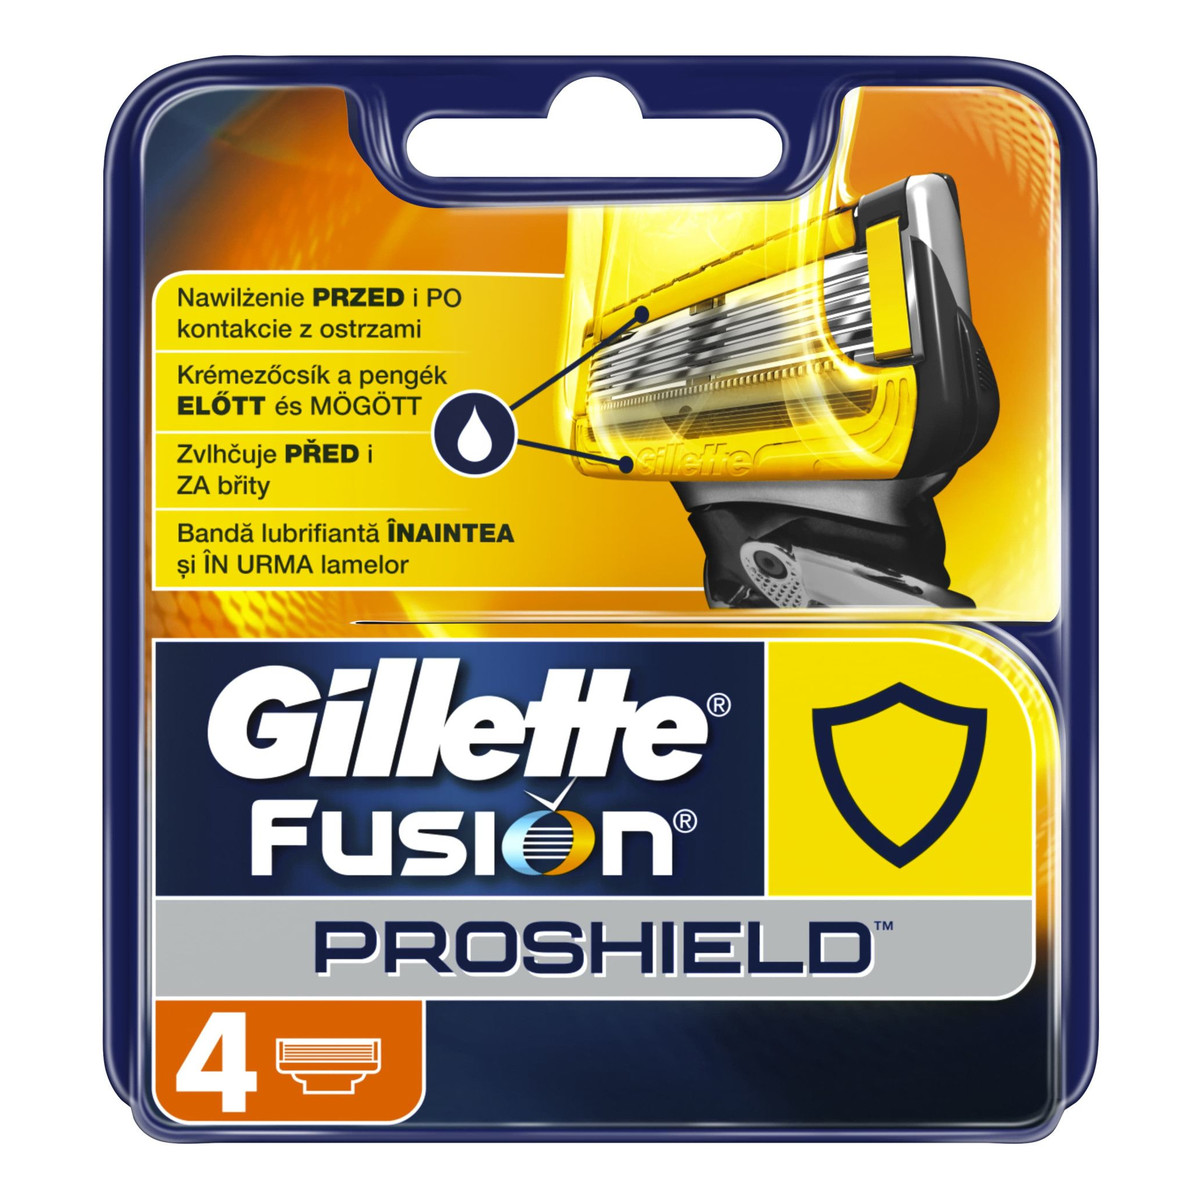 Gillette Fusion proshield zapasowe ostrza 4 szt